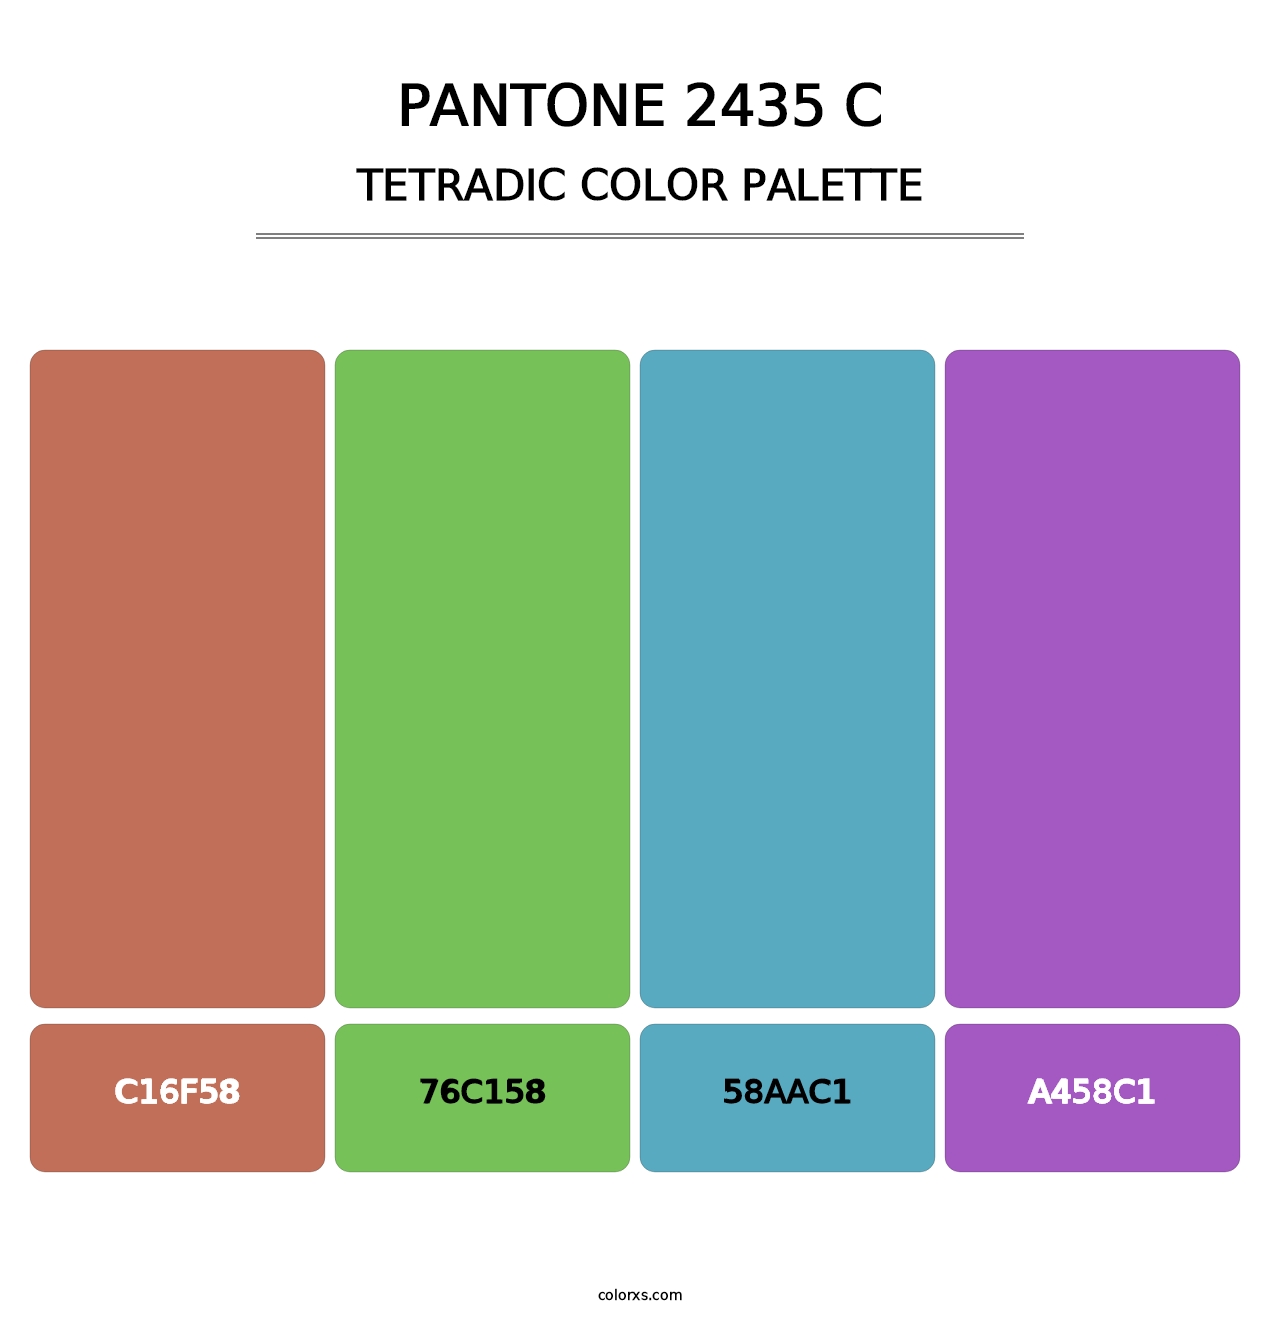 PANTONE 2435 C - Tetradic Color Palette